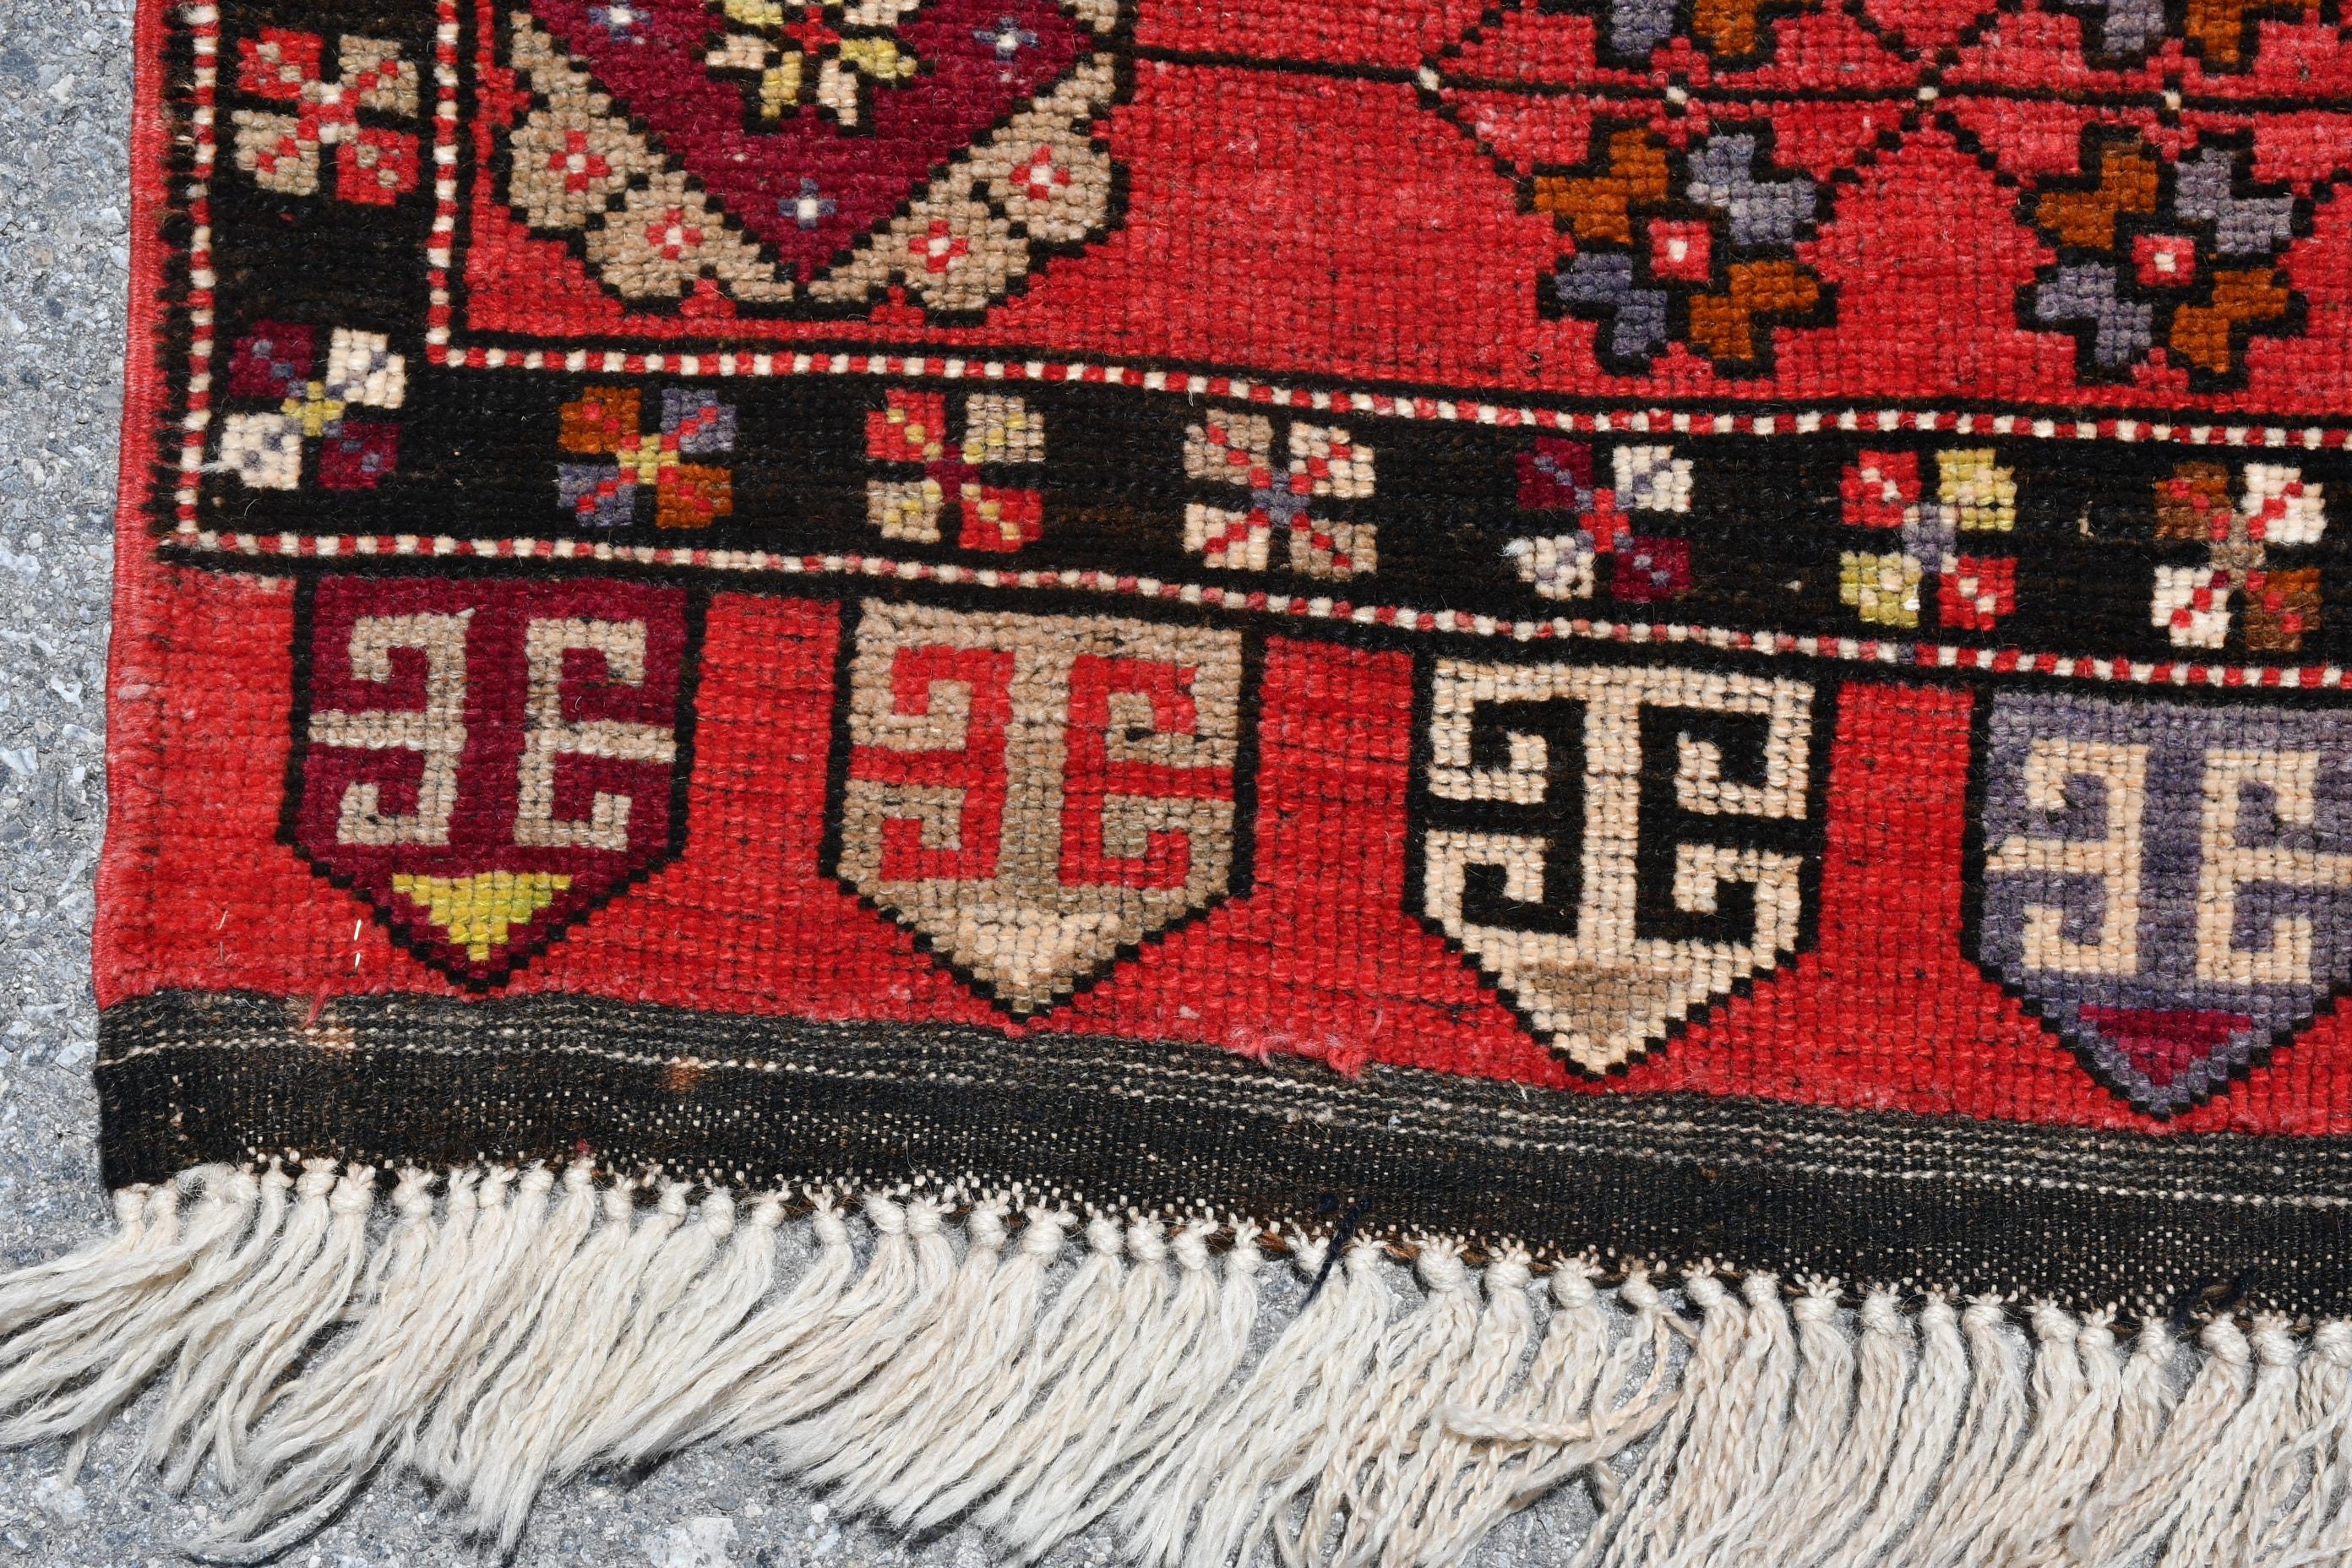 Wool Rug, Indoor Rug, Turkish Rug, Rugs for Nursery, Colorful Rugs, Vintage Decor Rug, Nursery Rug, Vintage Rugs, 3.8x6.4 ft Area Rug